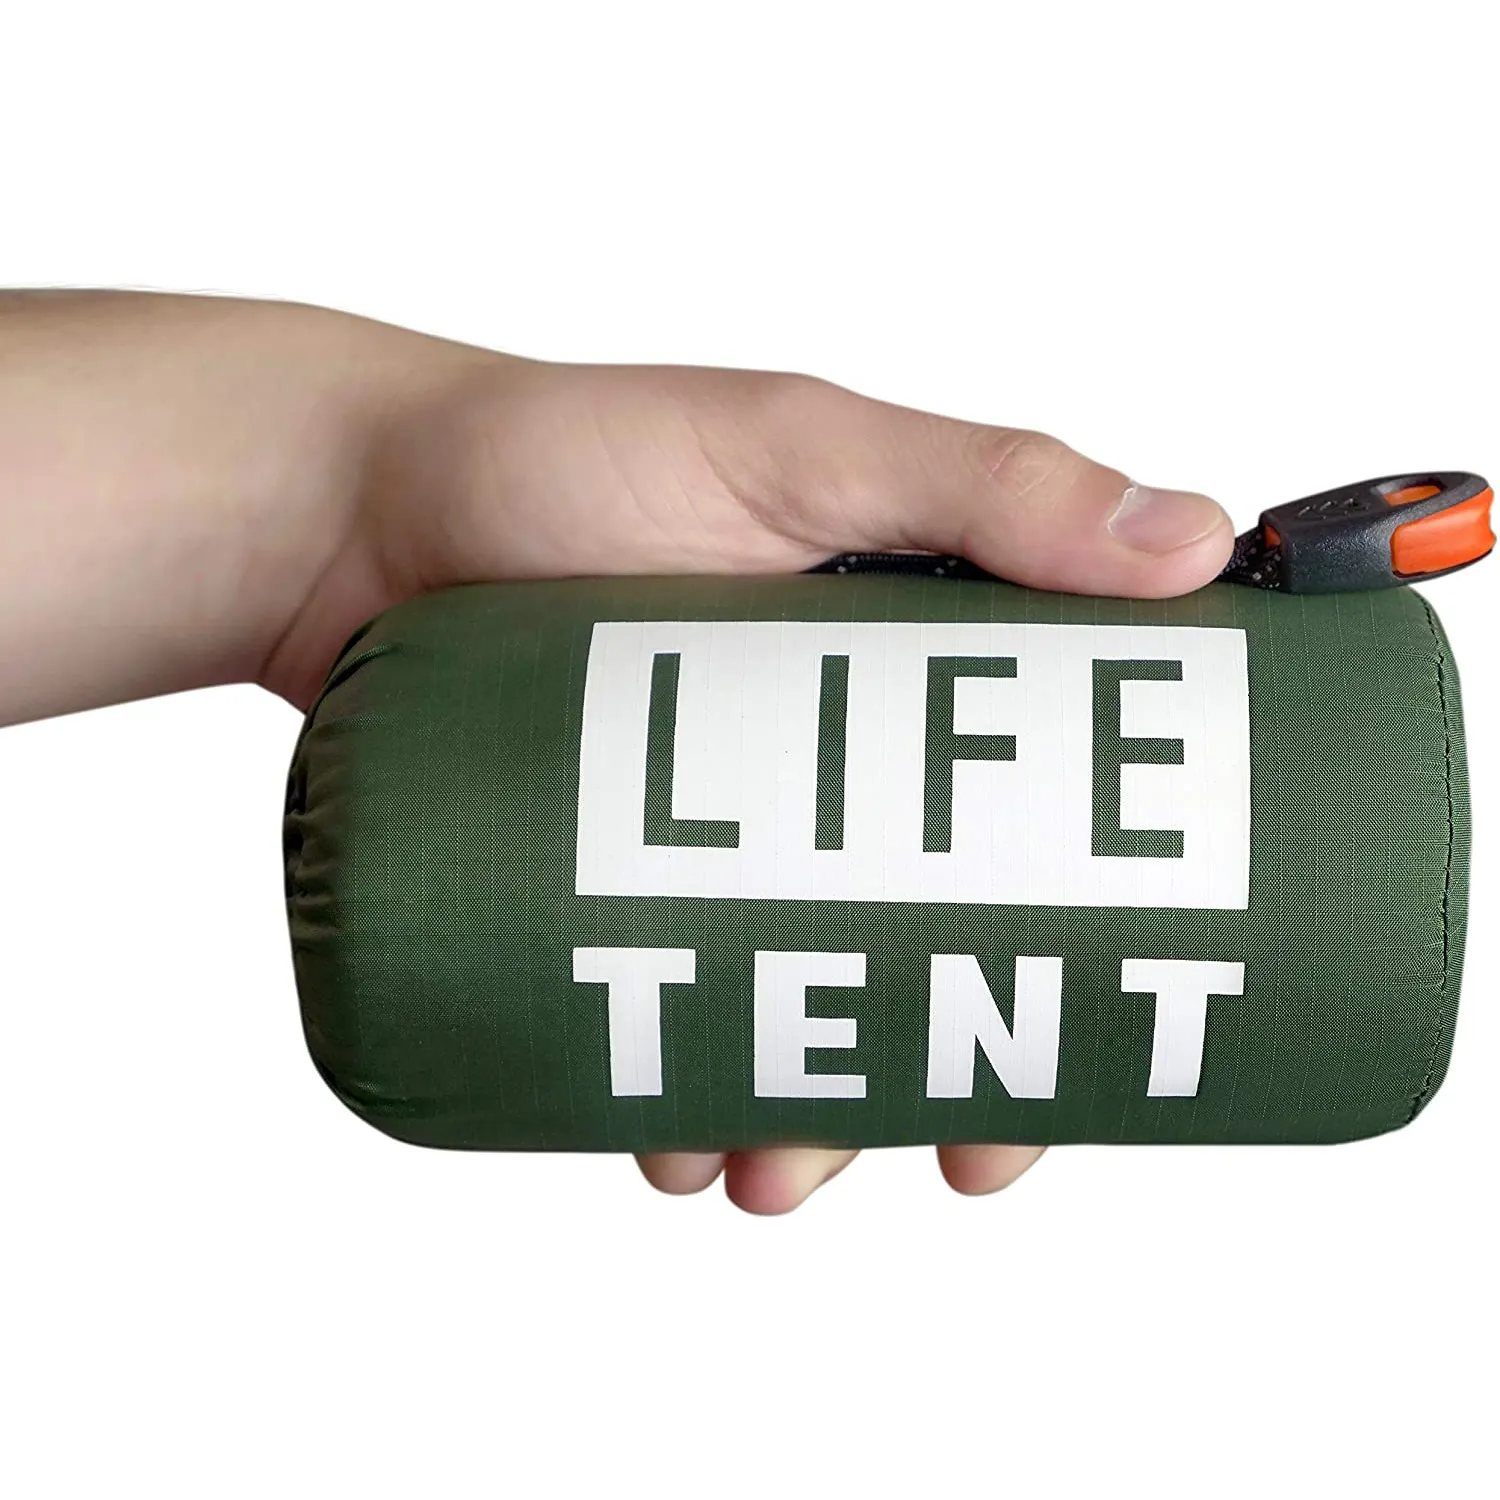 Emergency Tube Tent Survival Shelterナイロン袋でEmergency Shelter Tube Survival Tent